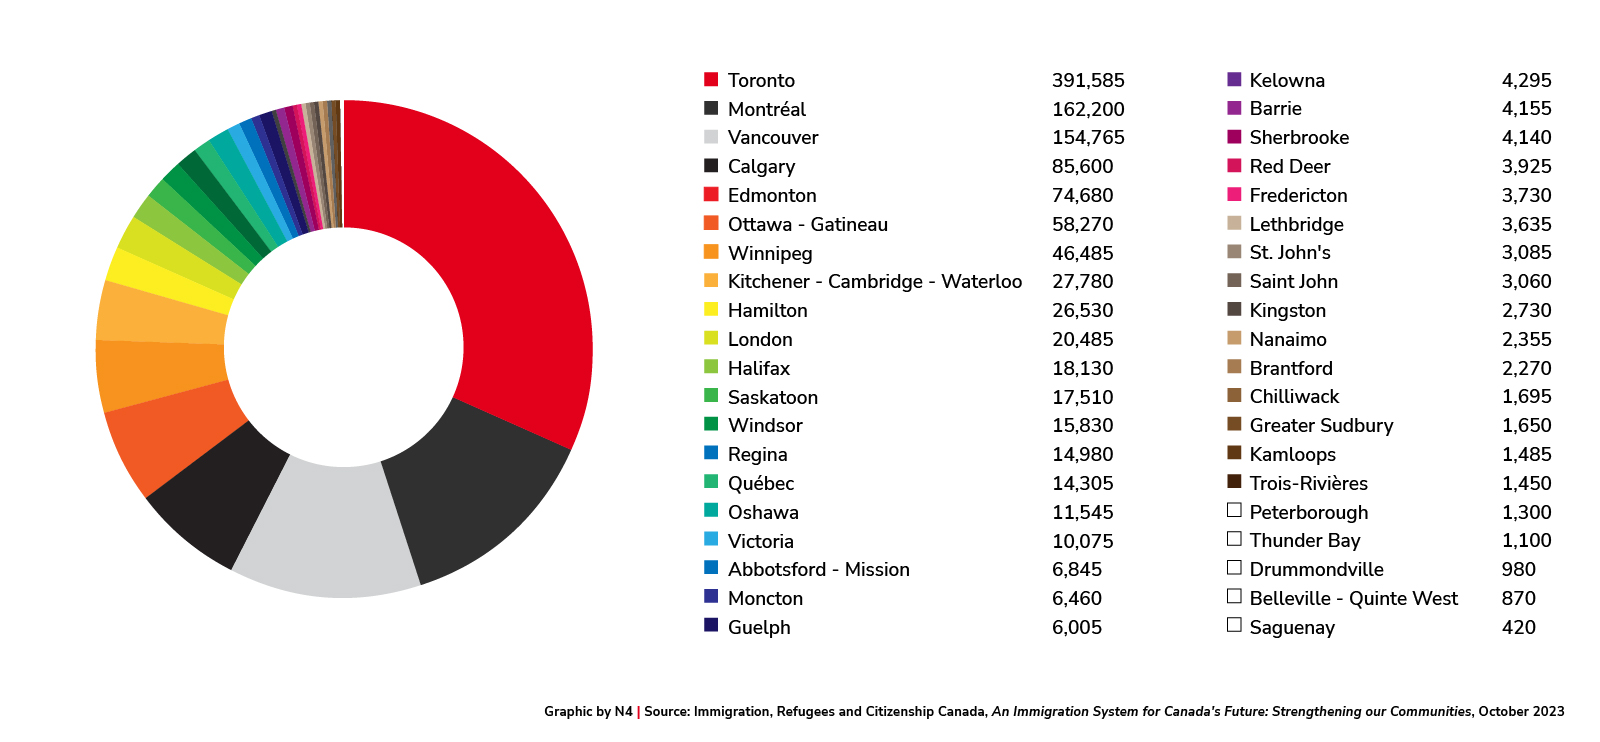 Number of recent immigrants in census metropolitan areas between 2016 and 2021 